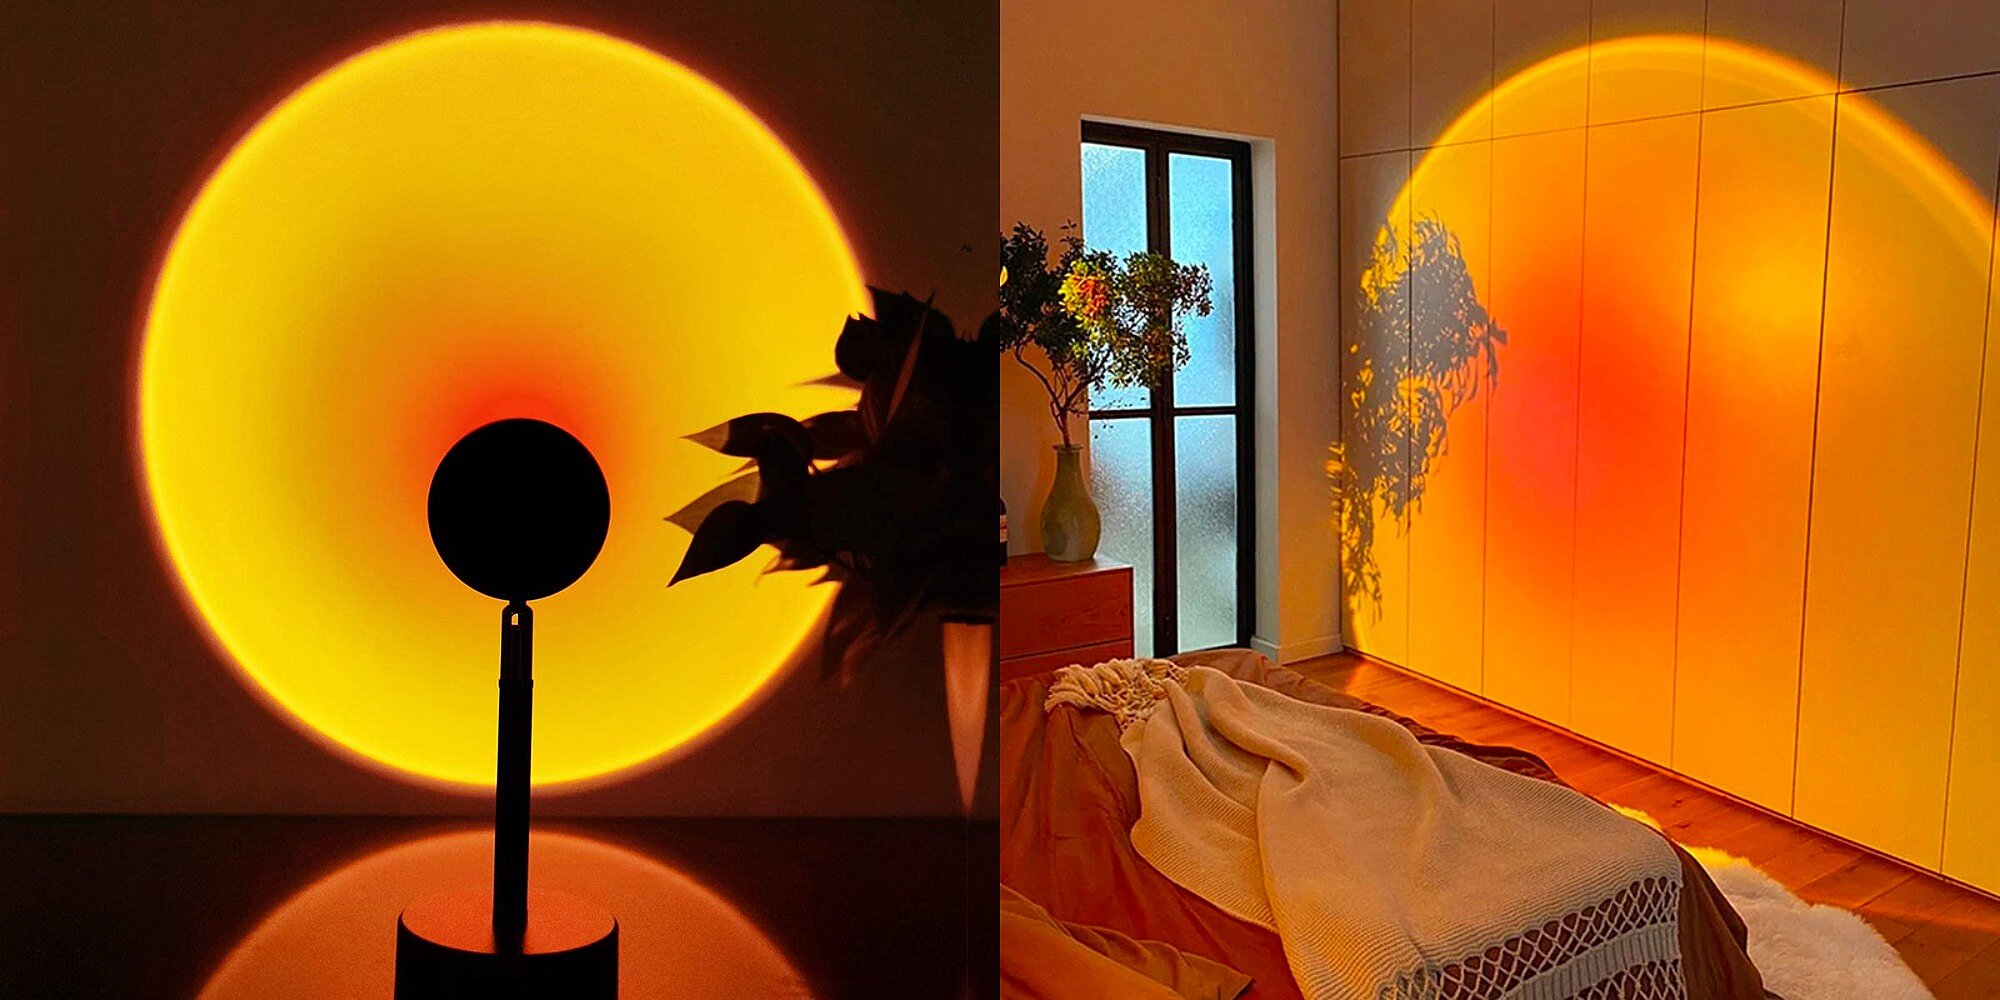 Sunset Lamp Amazon / Ashleigh & Burwood Golden Sunset Fragrance Lamp